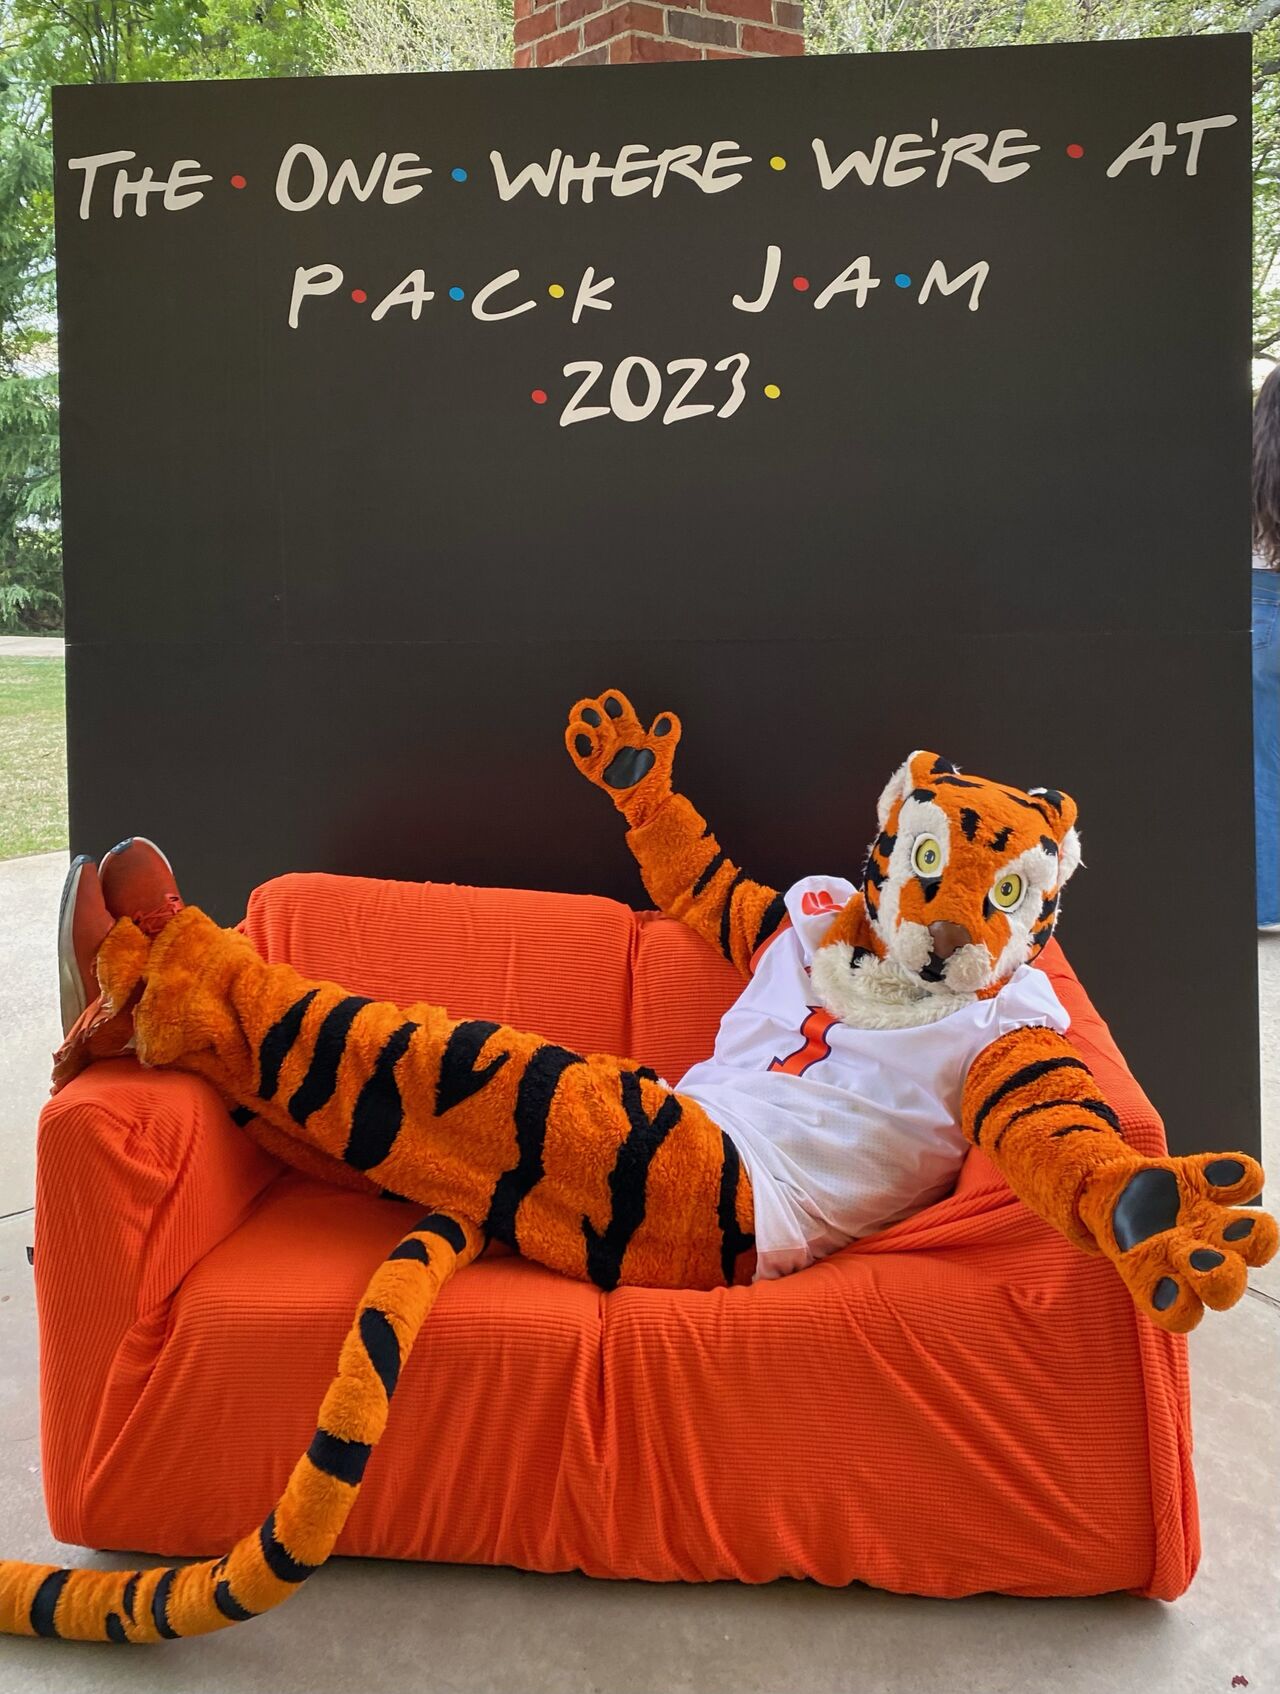 Clemson tiger at PackJam 2023